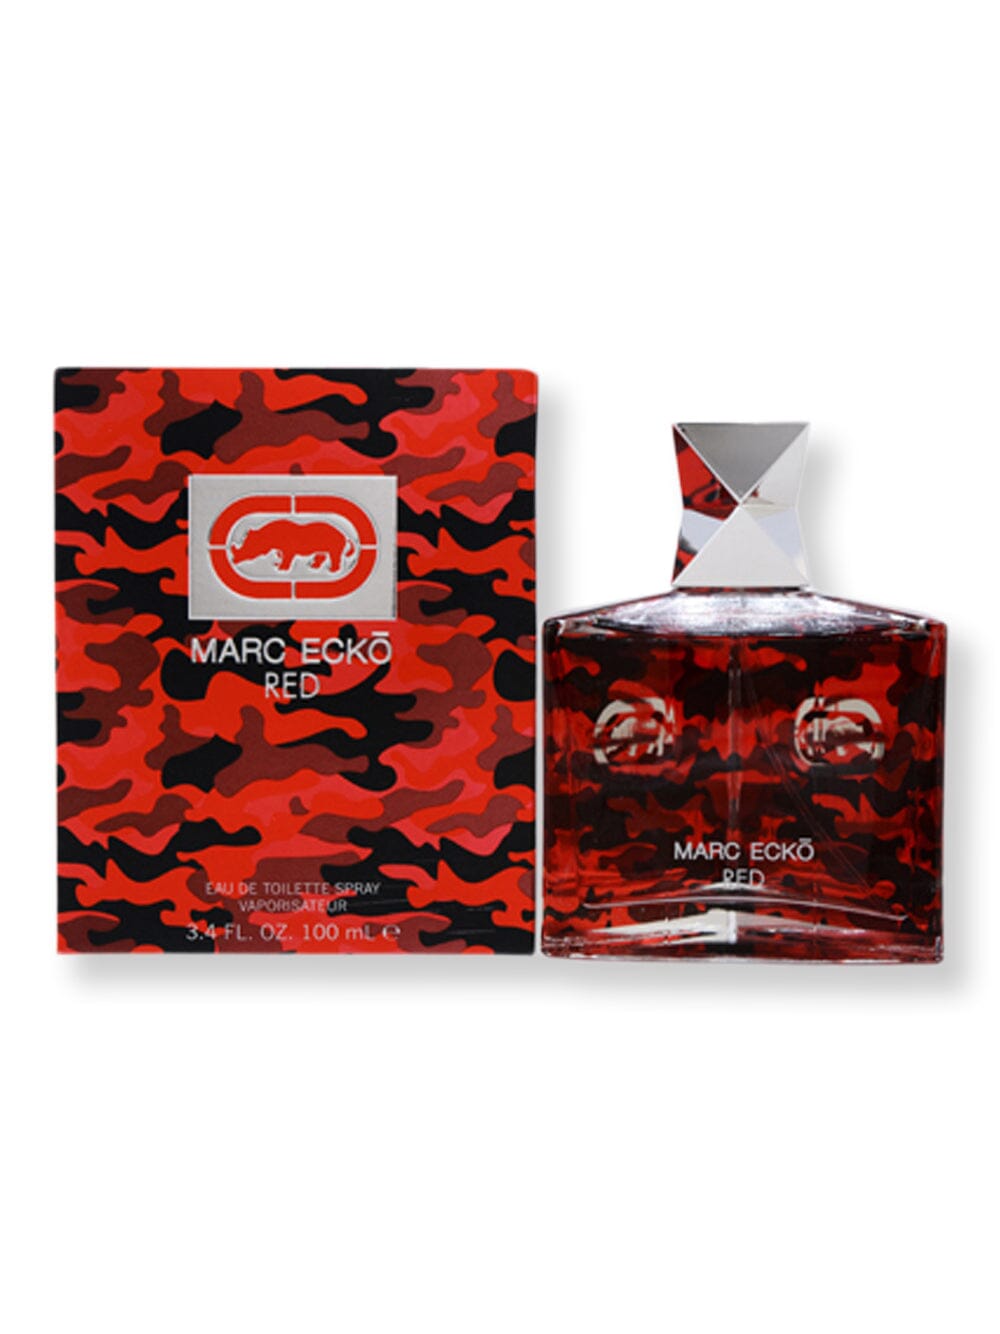 Marc Ecko Marc Ecko Ecko Red EDT Spray 3.4 oz100 ml Perfume 